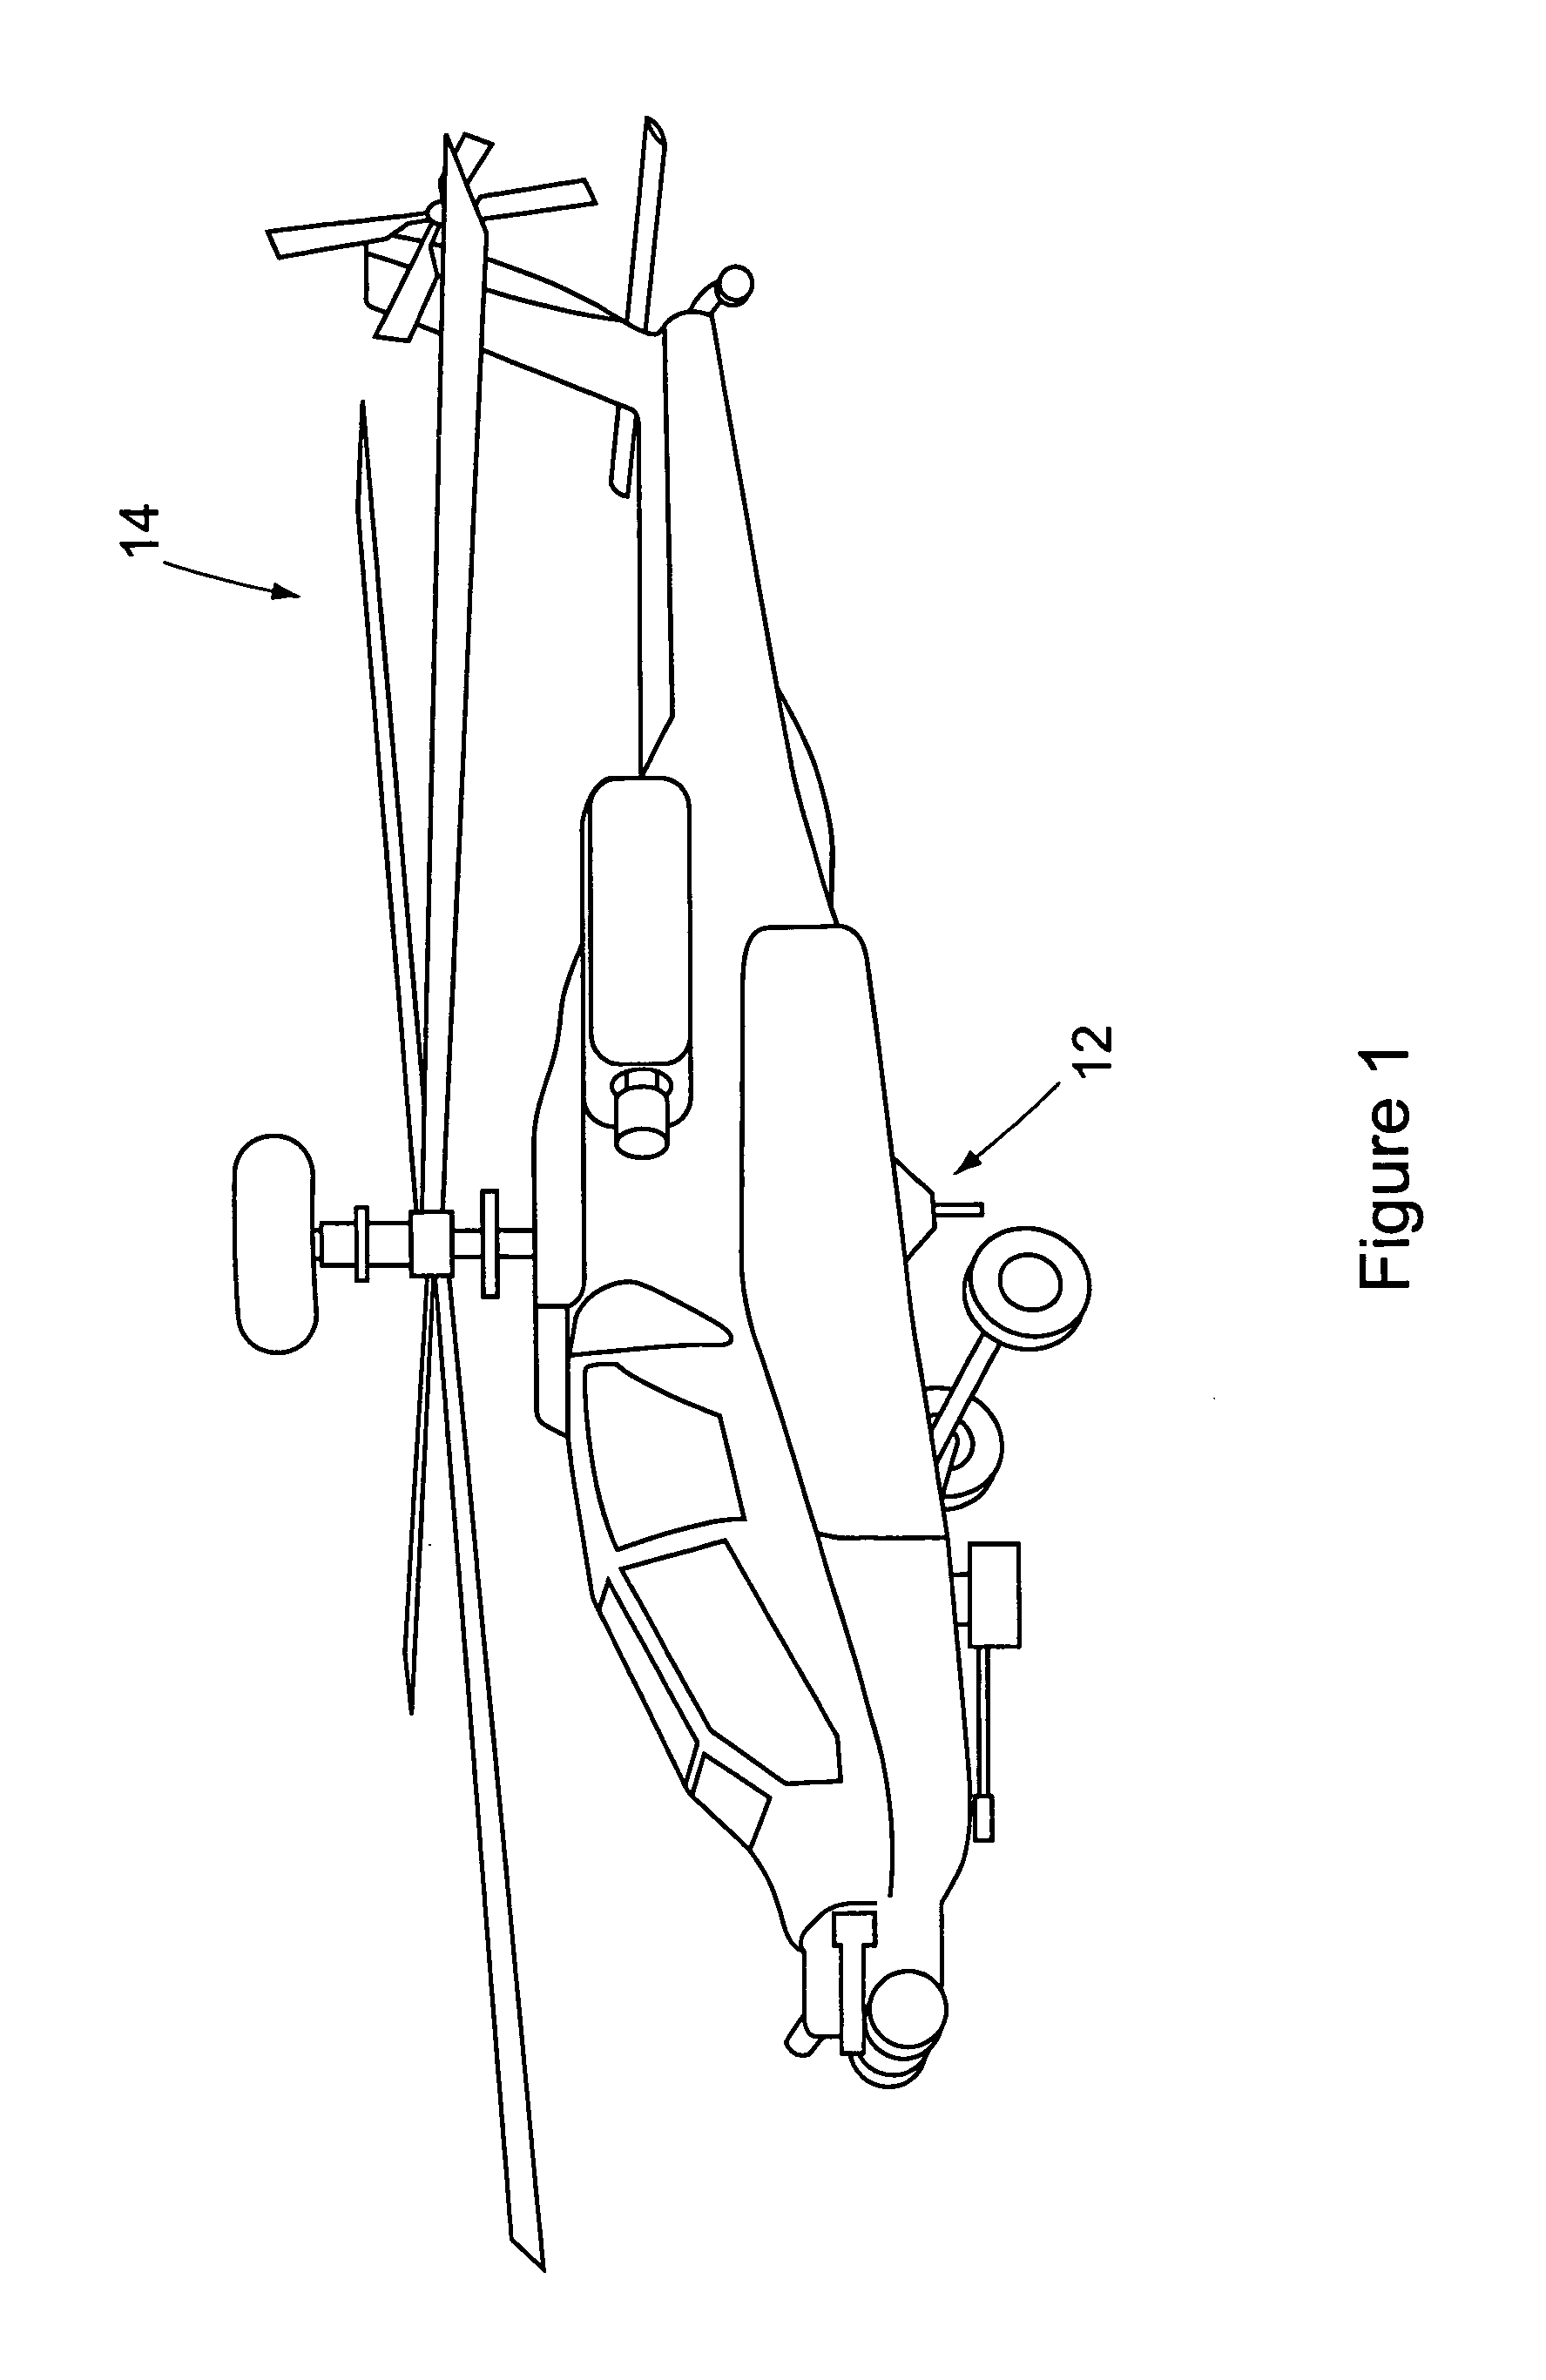 Landing assist apparatus with offset landing probe